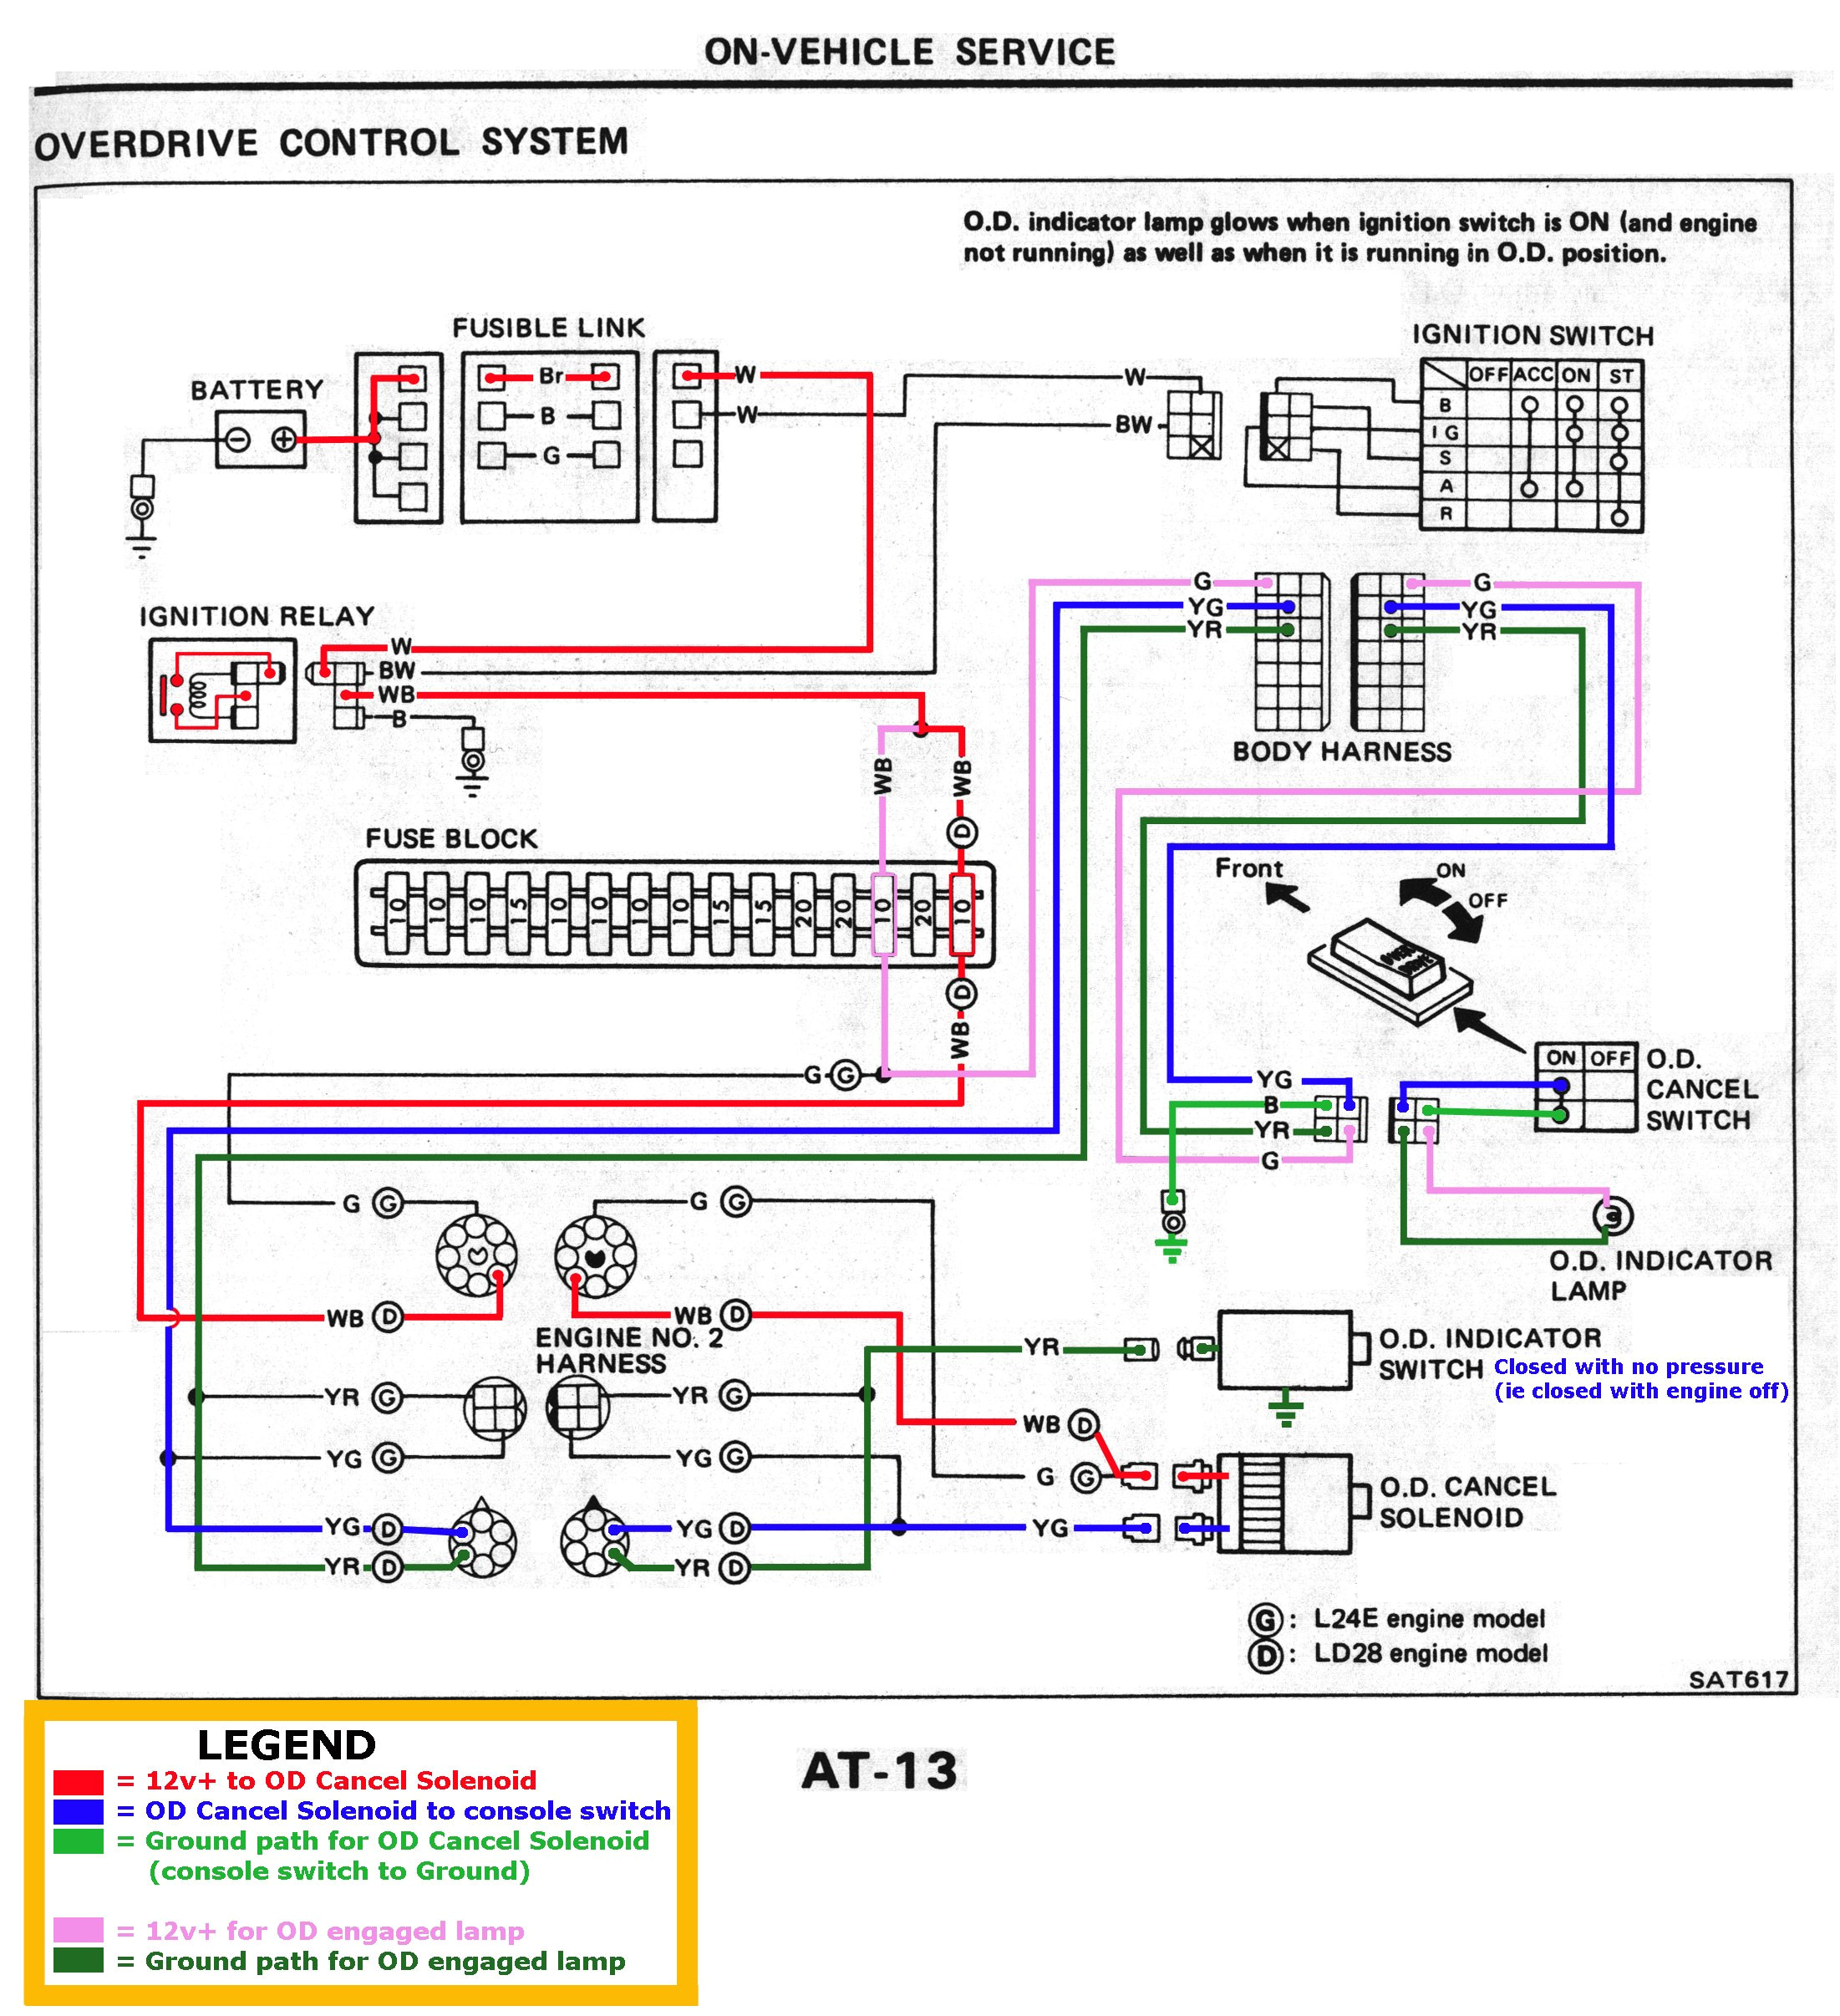 nissan terrano wiring diagram free download wiring diagram local nissan pathfinder alternator wiring diagram free download